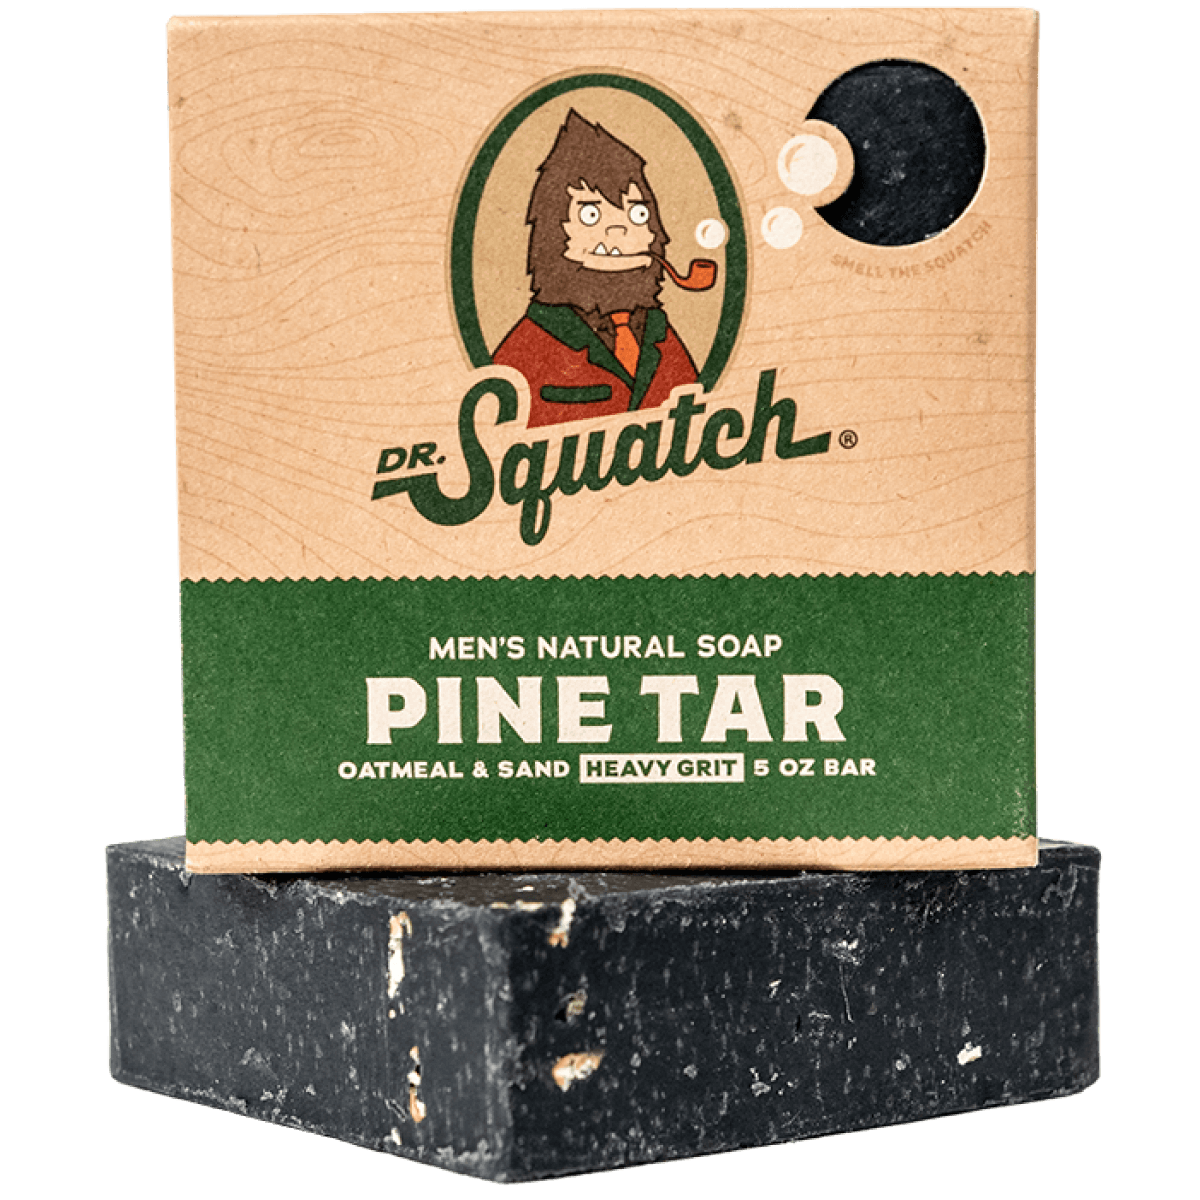 Dr. Squatch Pine Tar Men's Natural Bar Soap